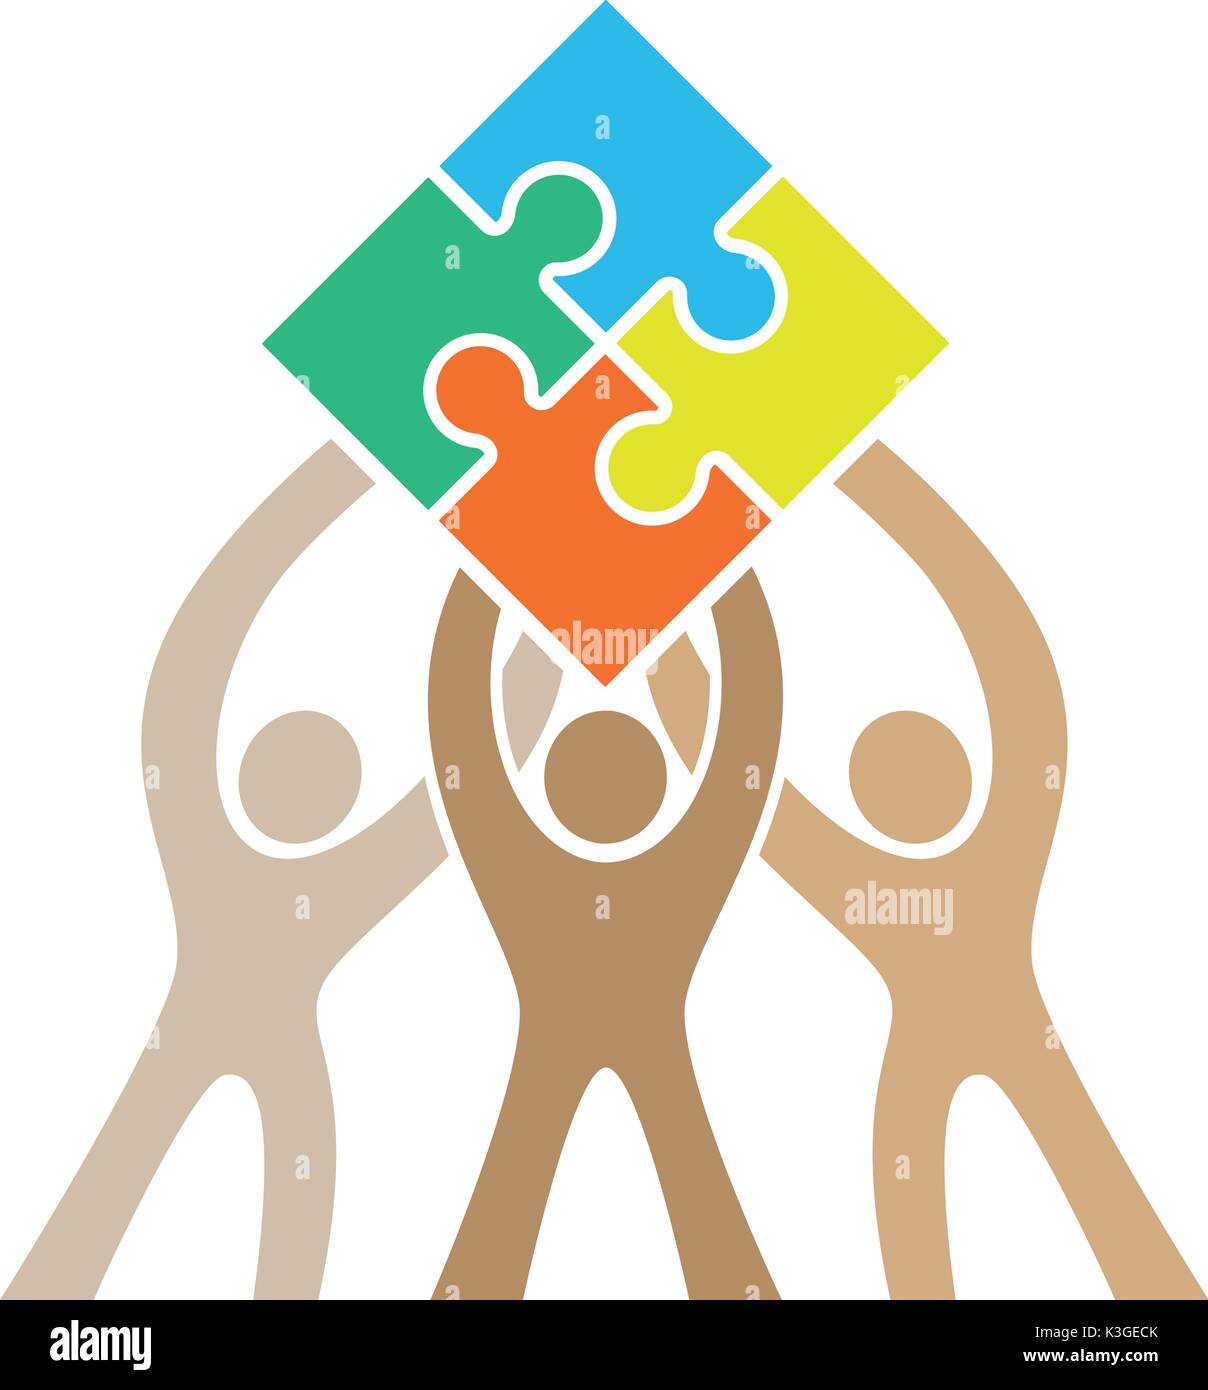 Teamwork Diversity Puzzle Logo Stock Vector